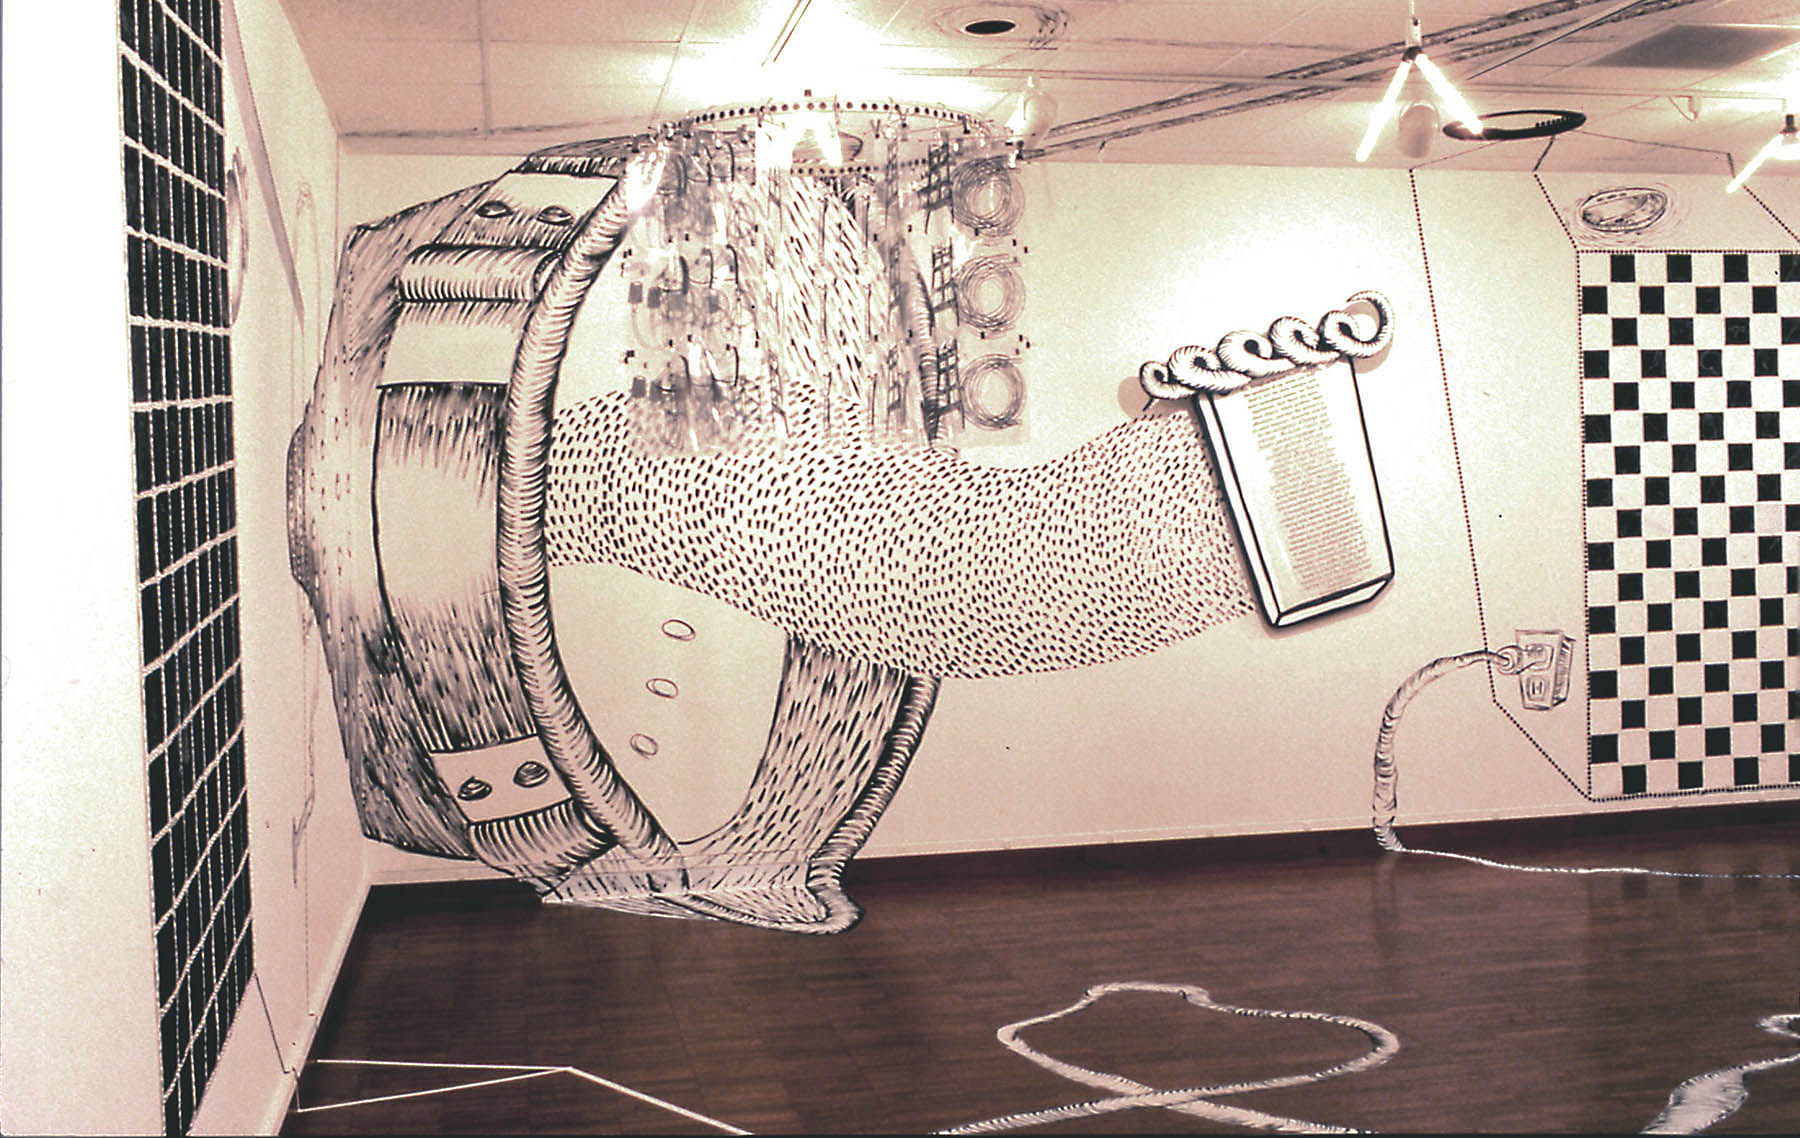 Perforated Vanities II, installation view, 1997, mixed media